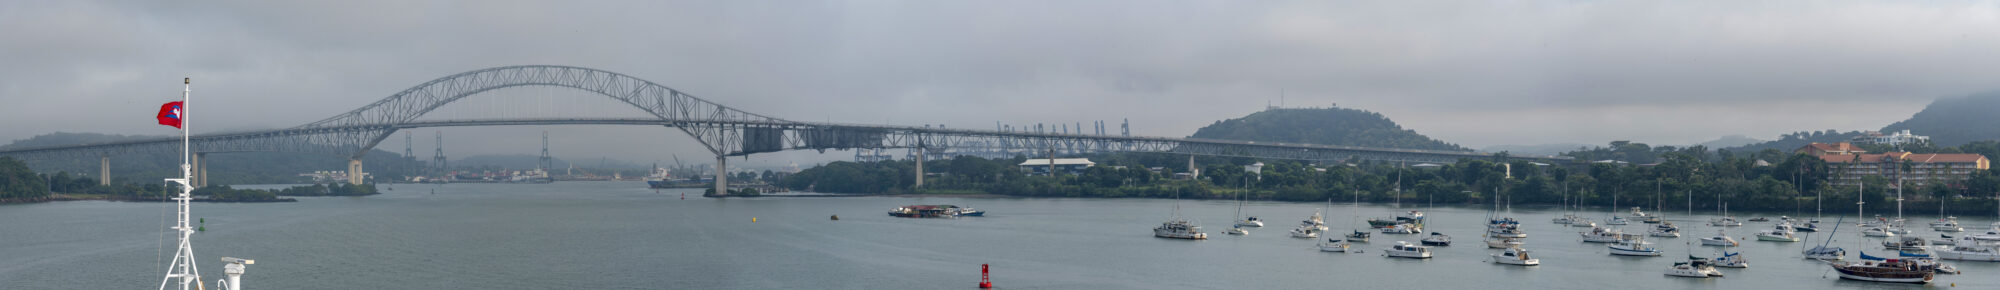 Panama Canal (12)